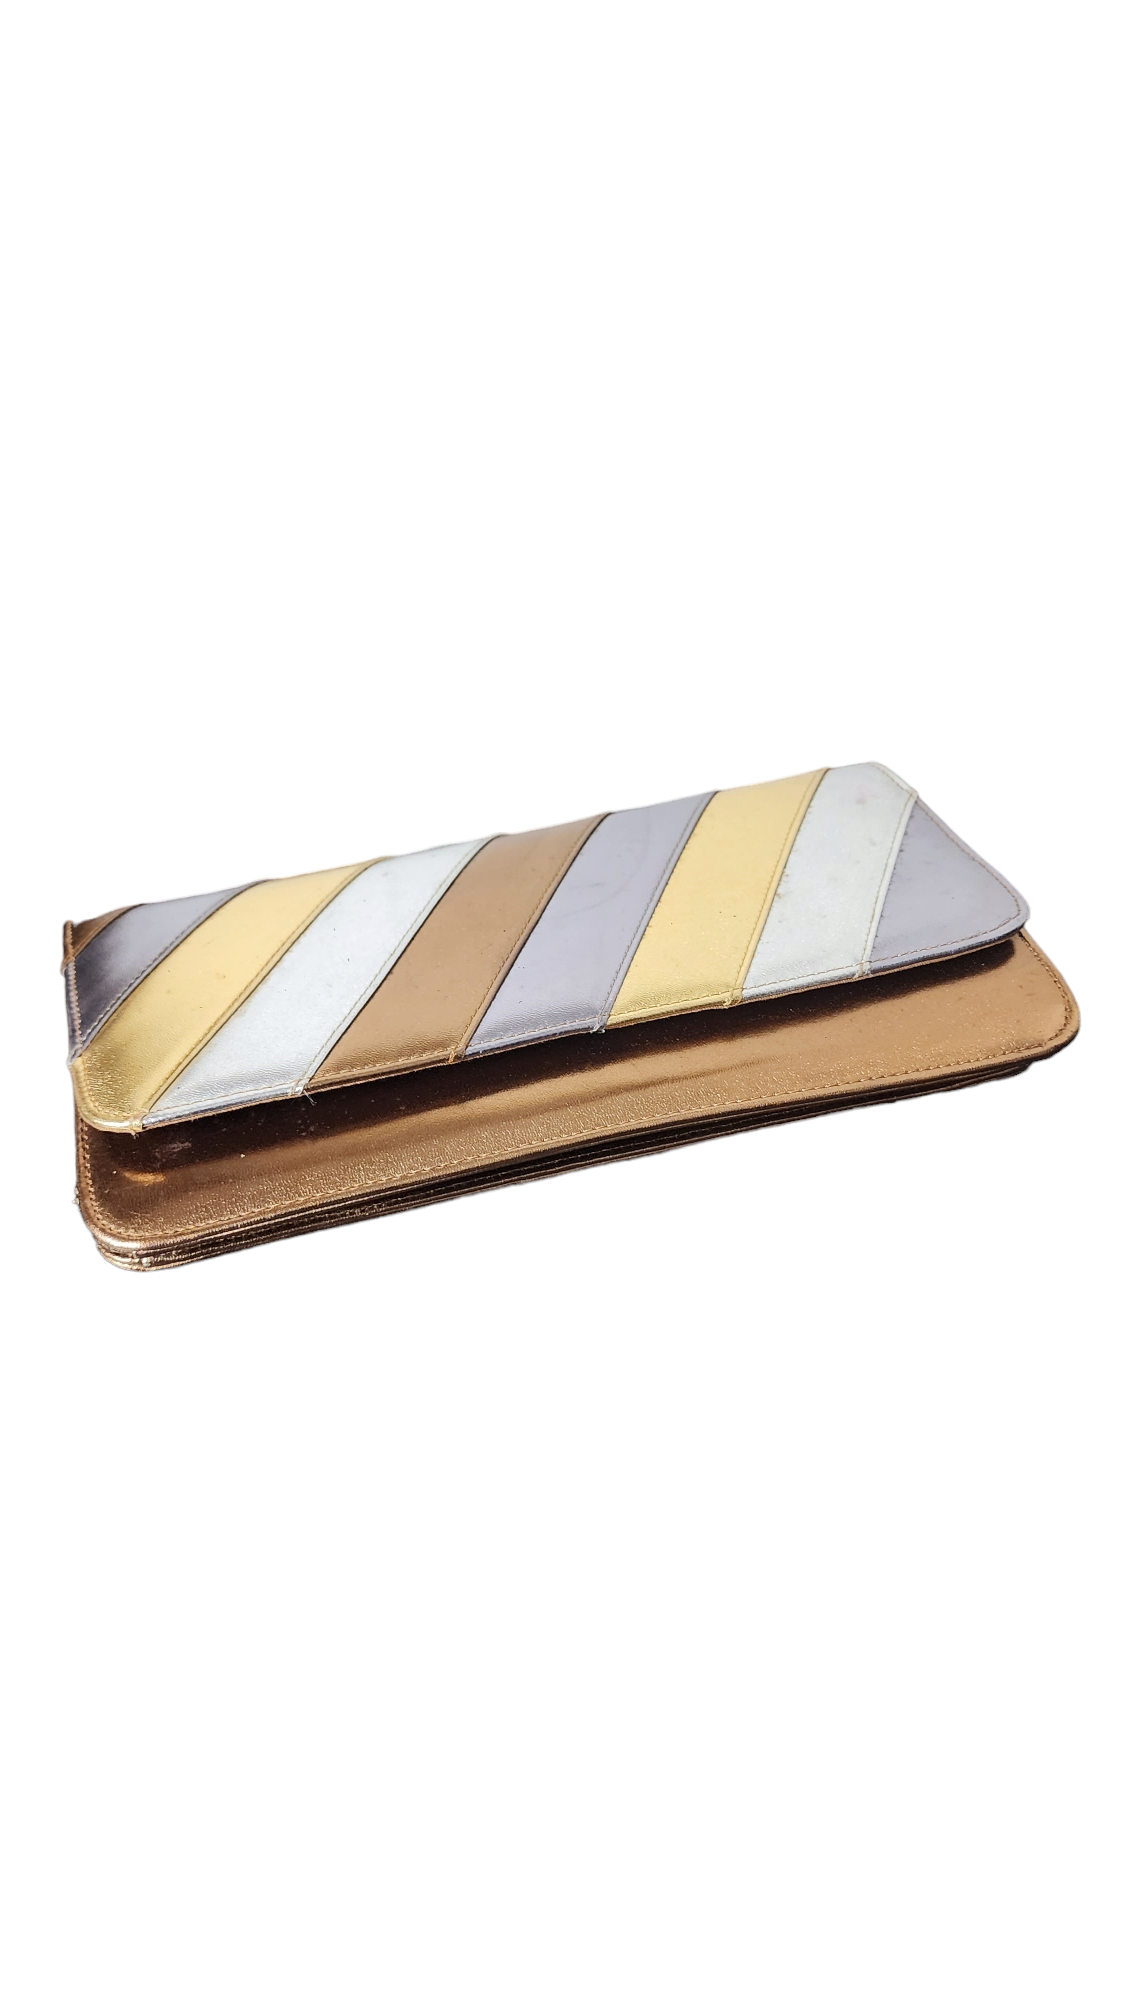 Vintage silver gold bronze striped clutch